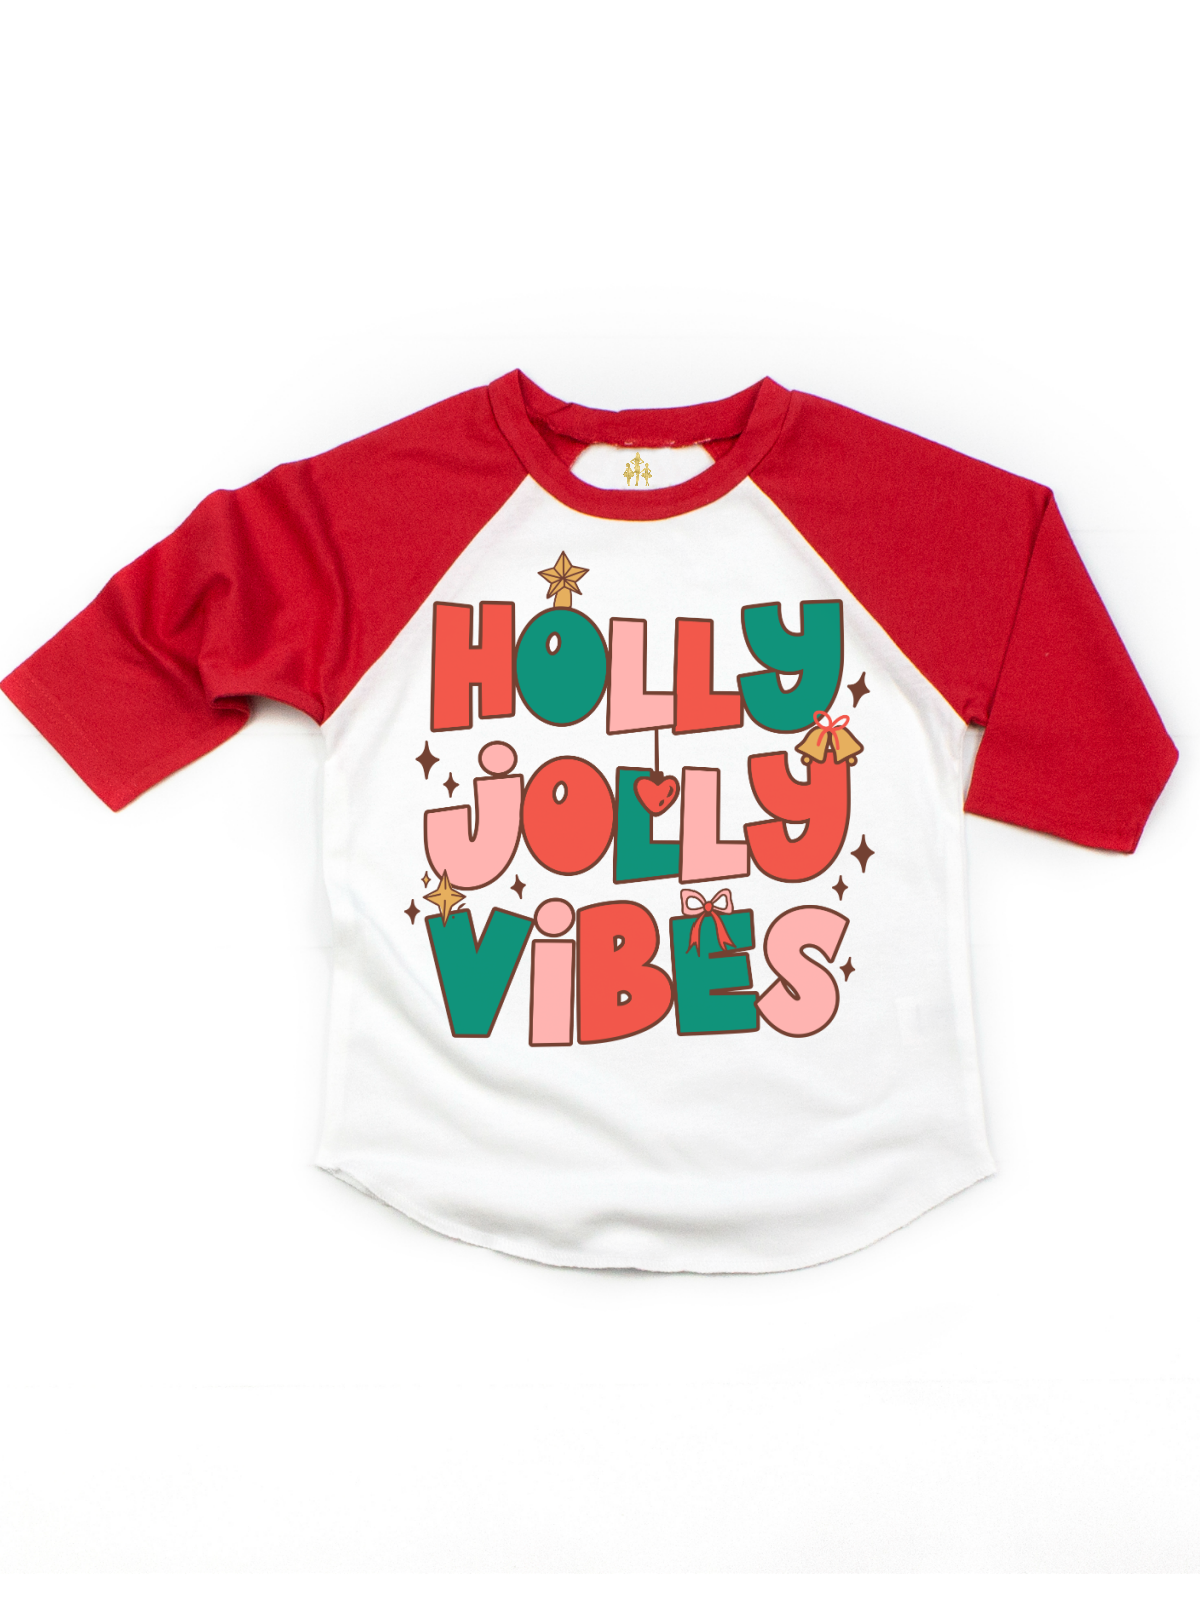 Holly Jolly Vibes Kids Christmas Raglan Shirt